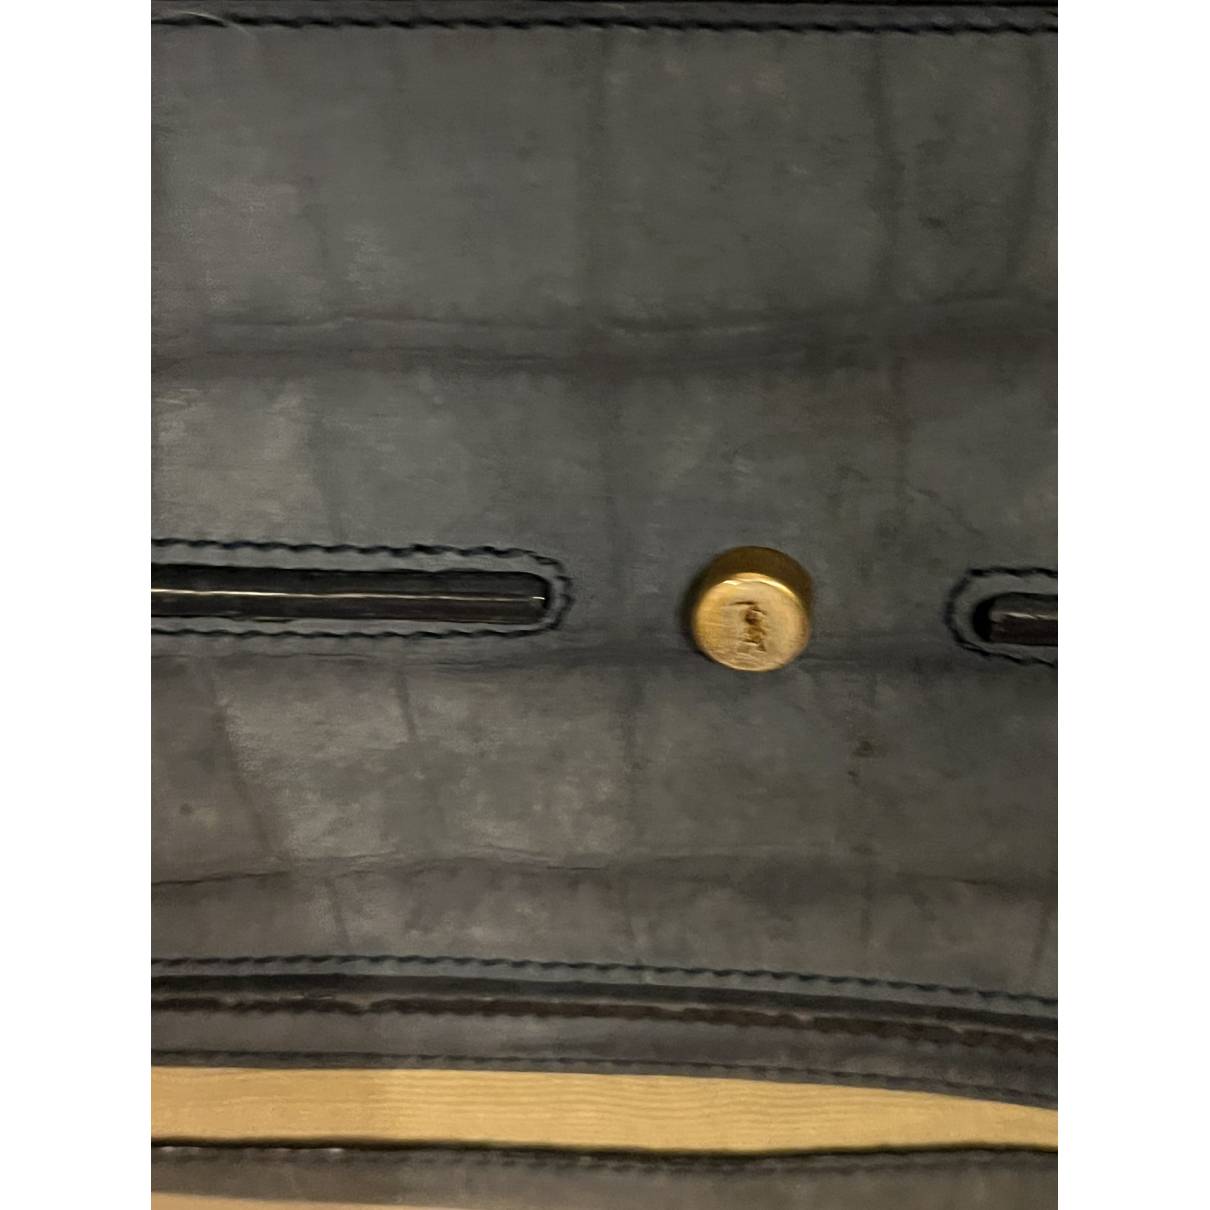 Messenger leather handbag Yves Saint Laurent